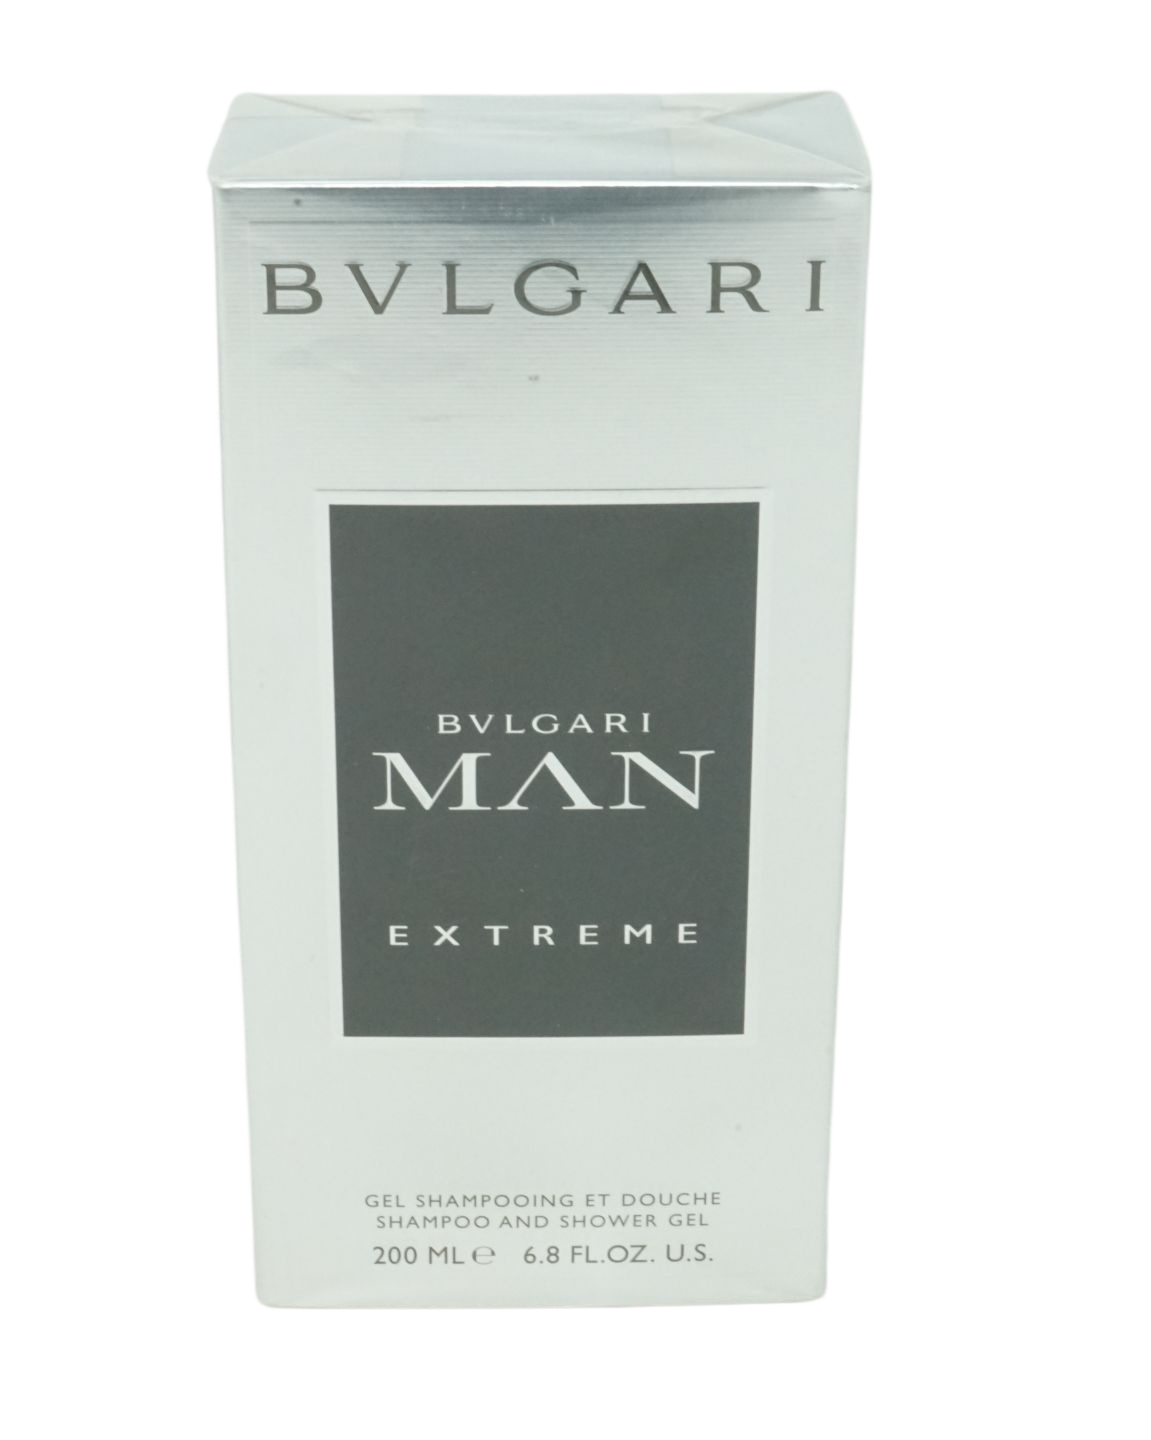 Bvlgari Man Extreme Shampoo and Shower Gel 200ml